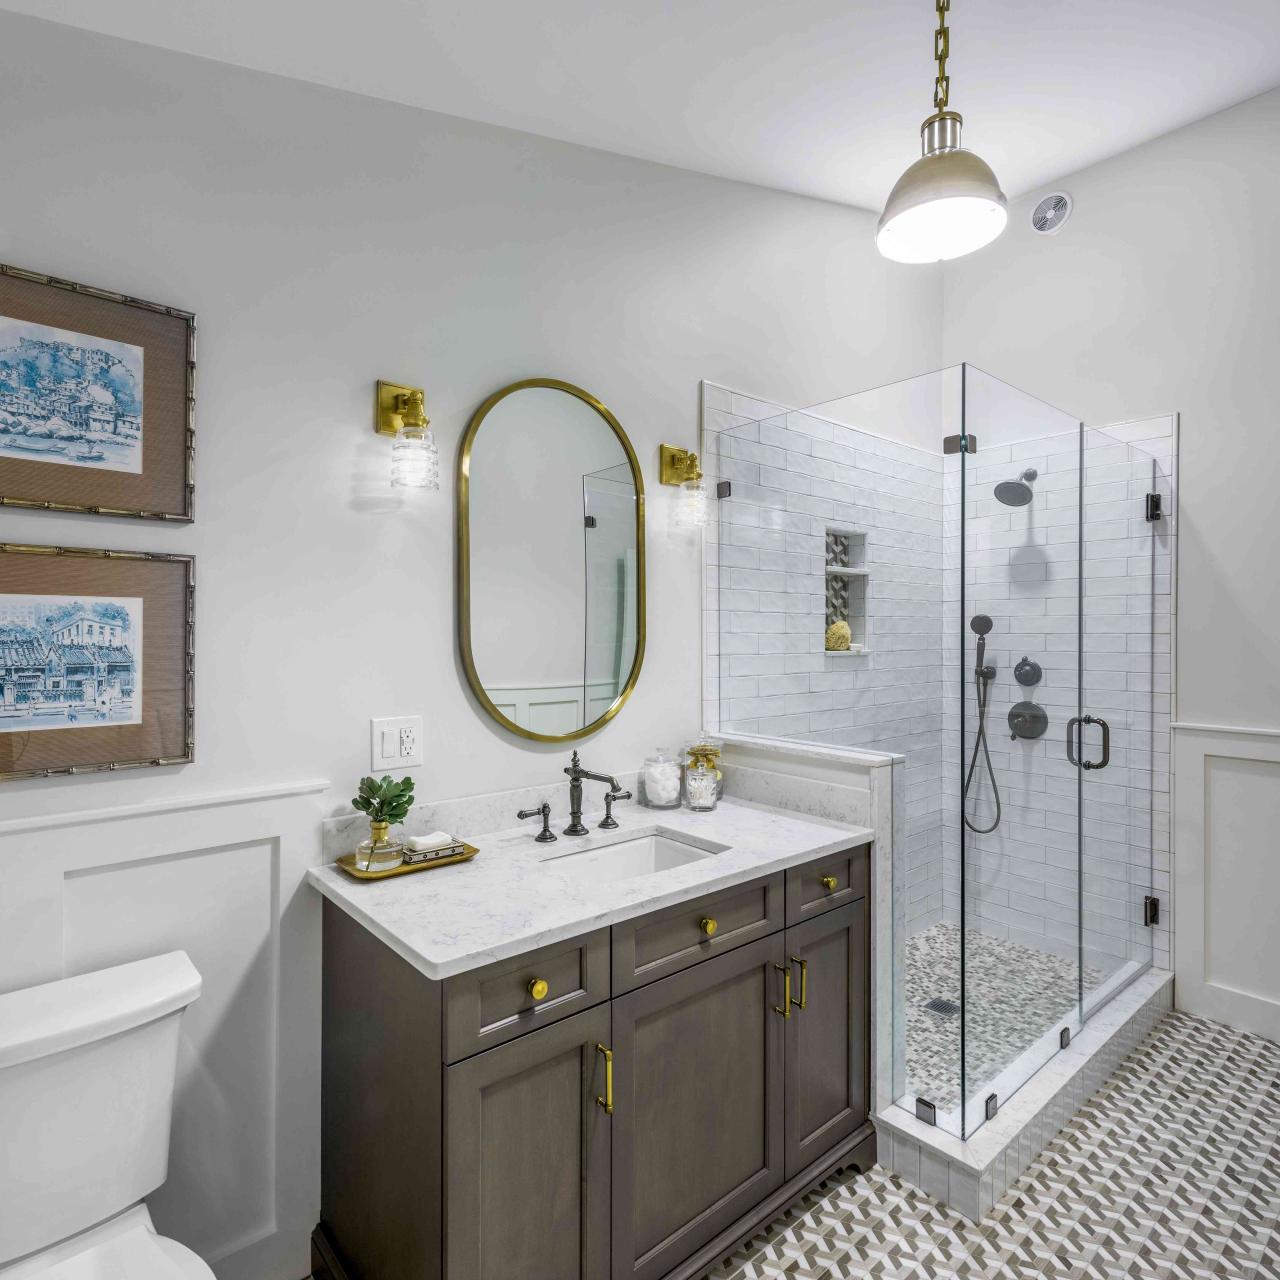 18 Bathroom Flooring Ideas to Inspire Your Next Remodel